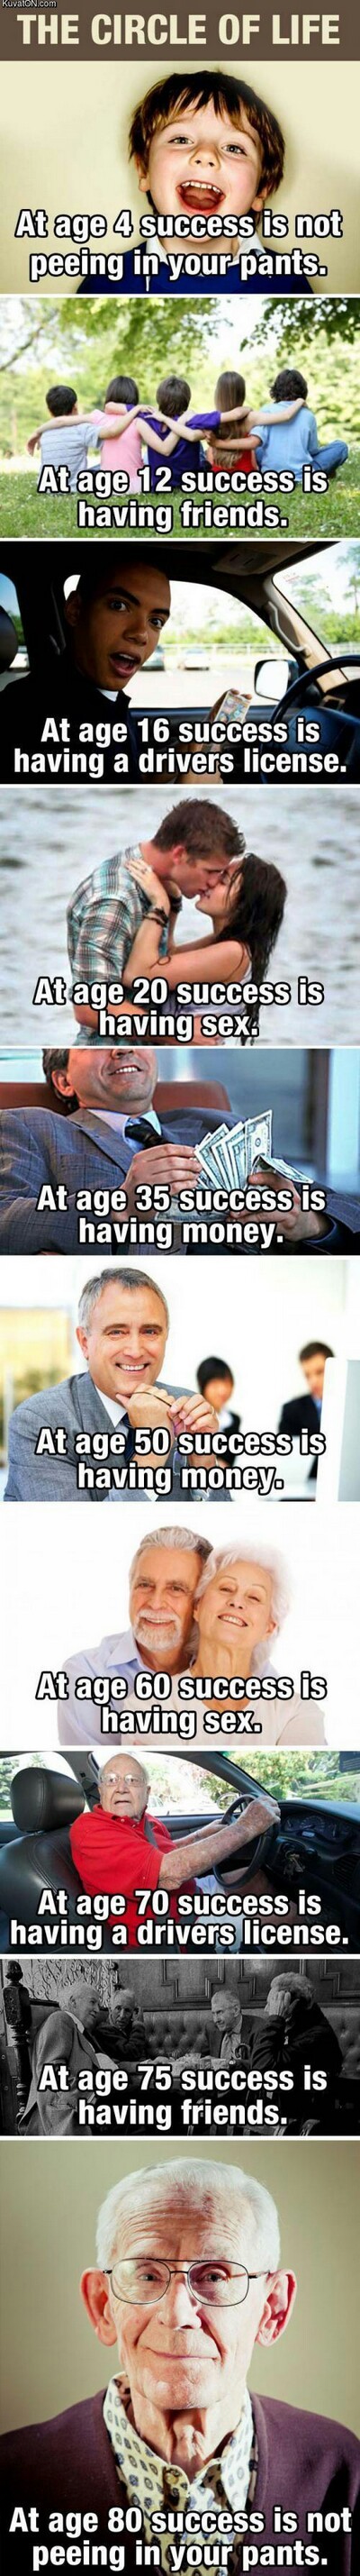 The circle of success - meme